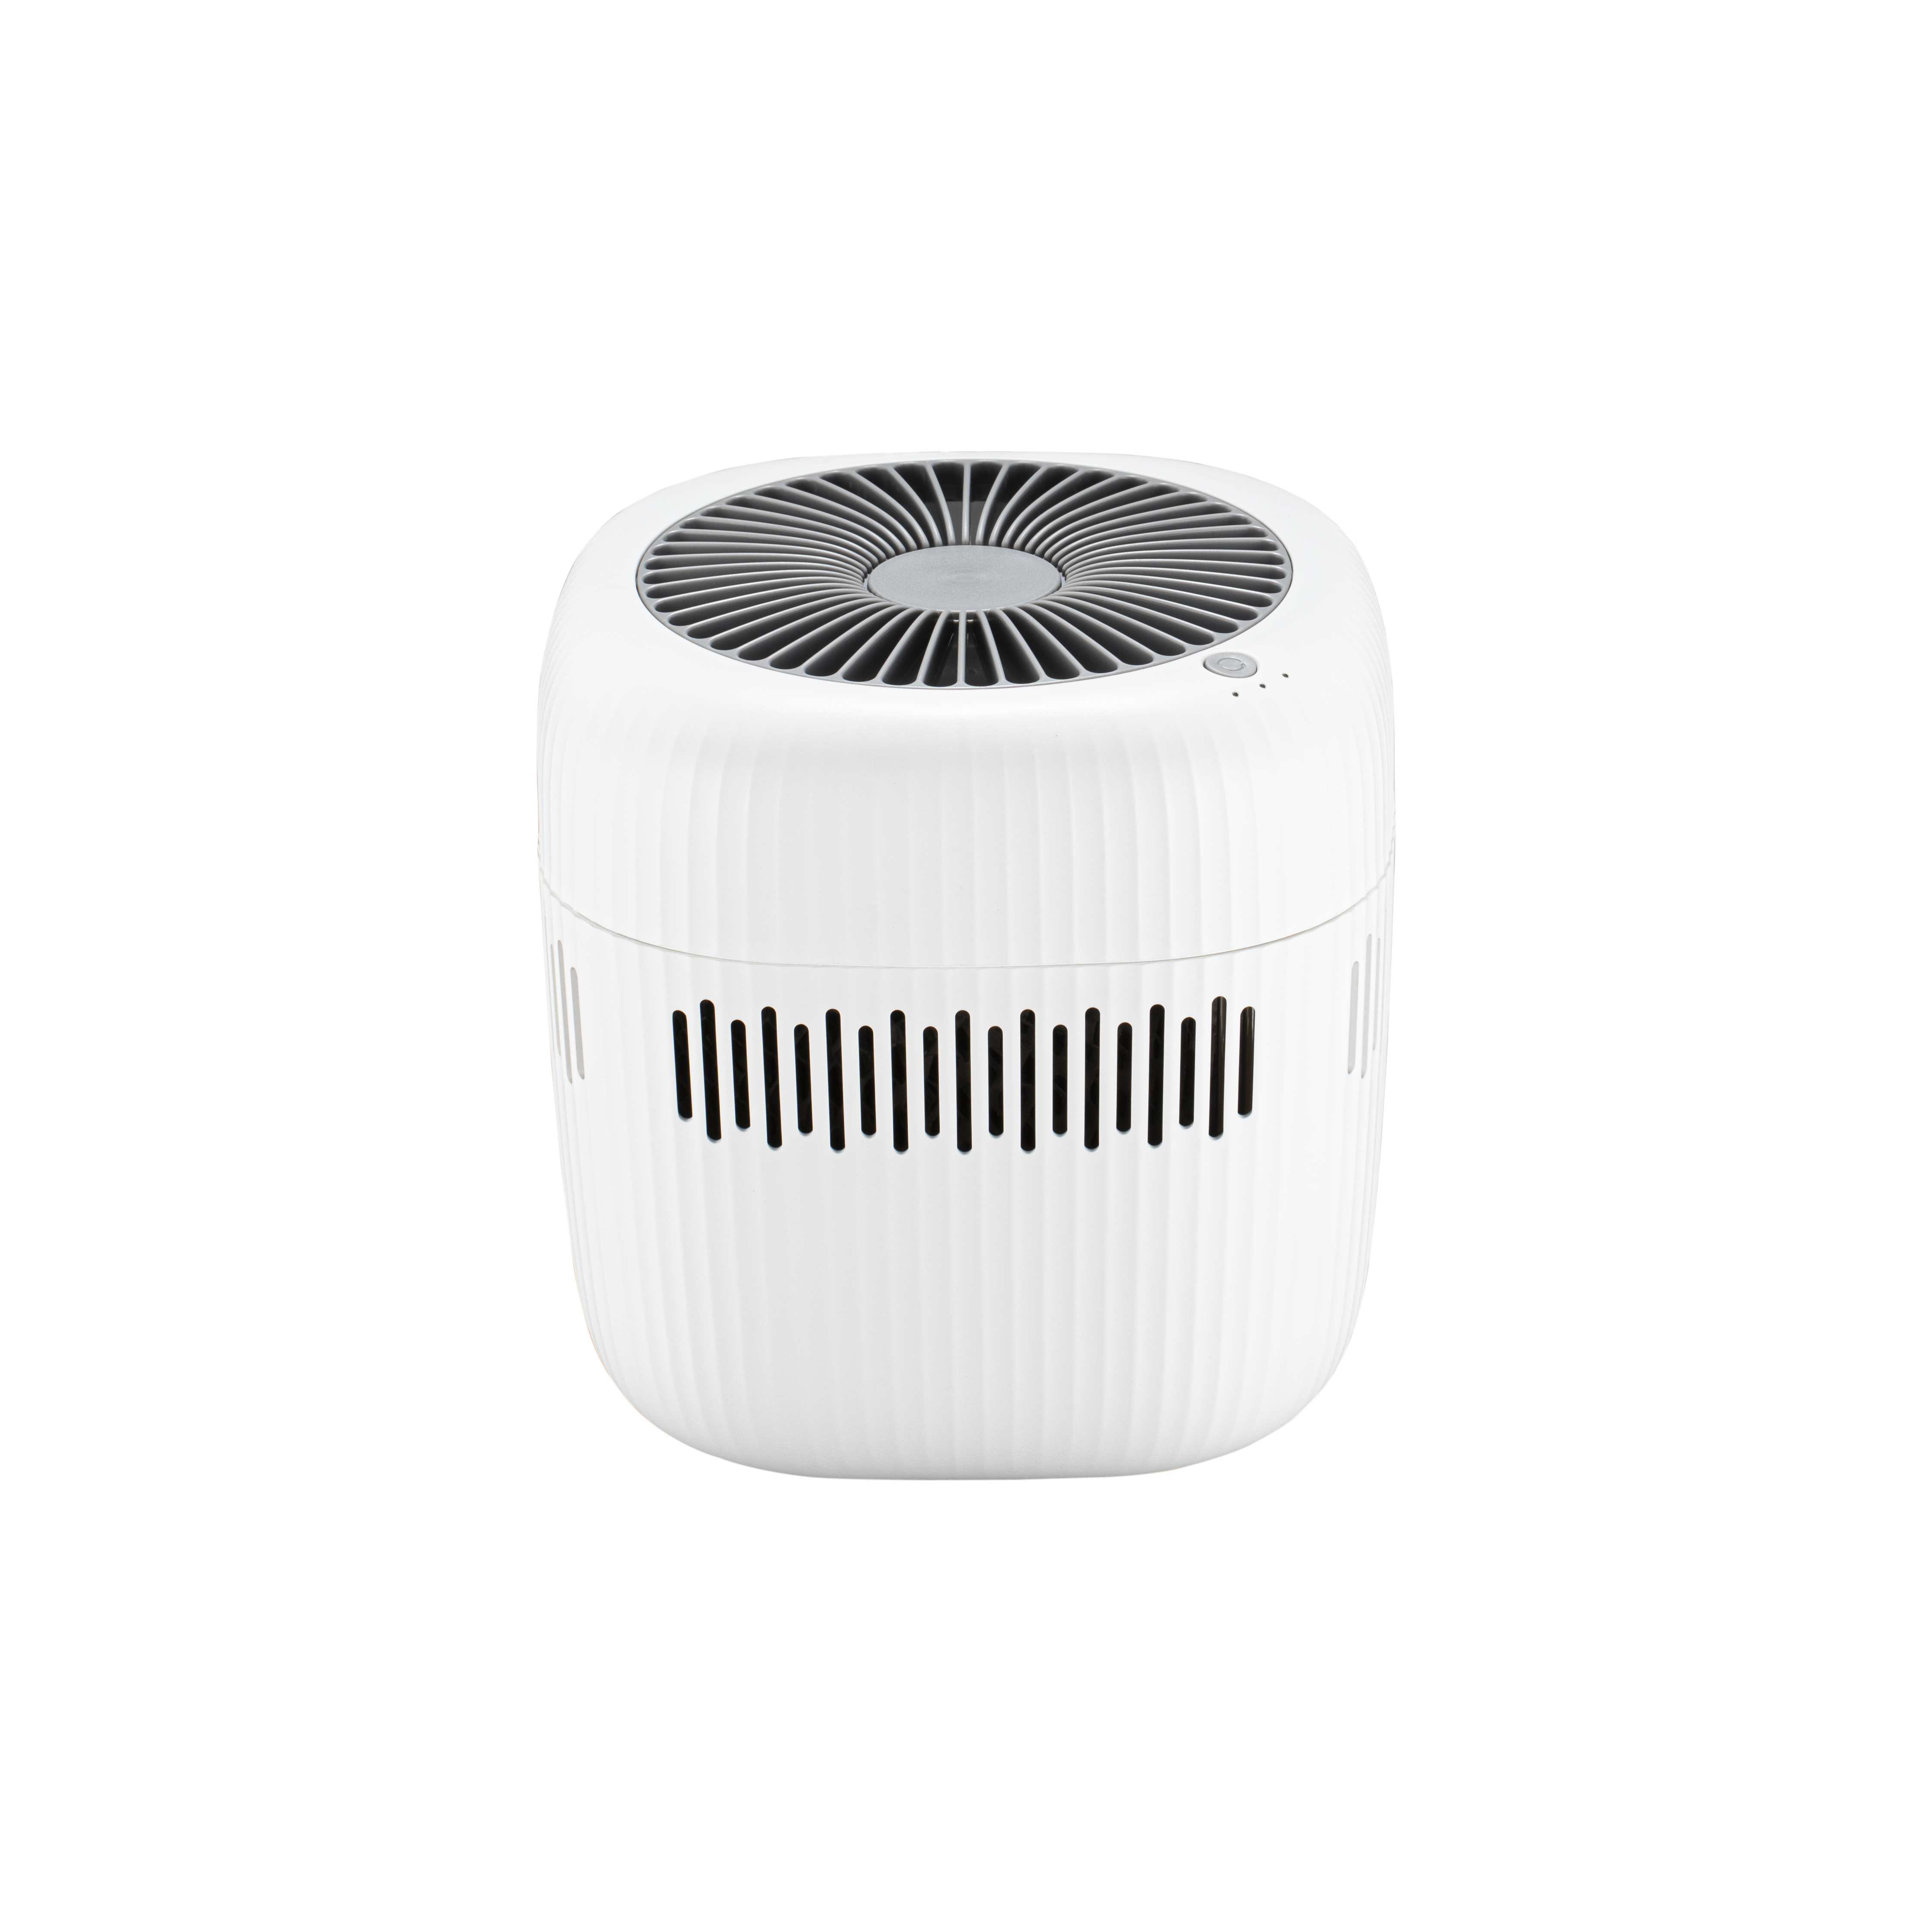 Увлажнитель воздуха Xiaomi Microhoo Evaporative Humidifier J1B воздухоувлажнитель smartmi evaporative humidifier 2 white